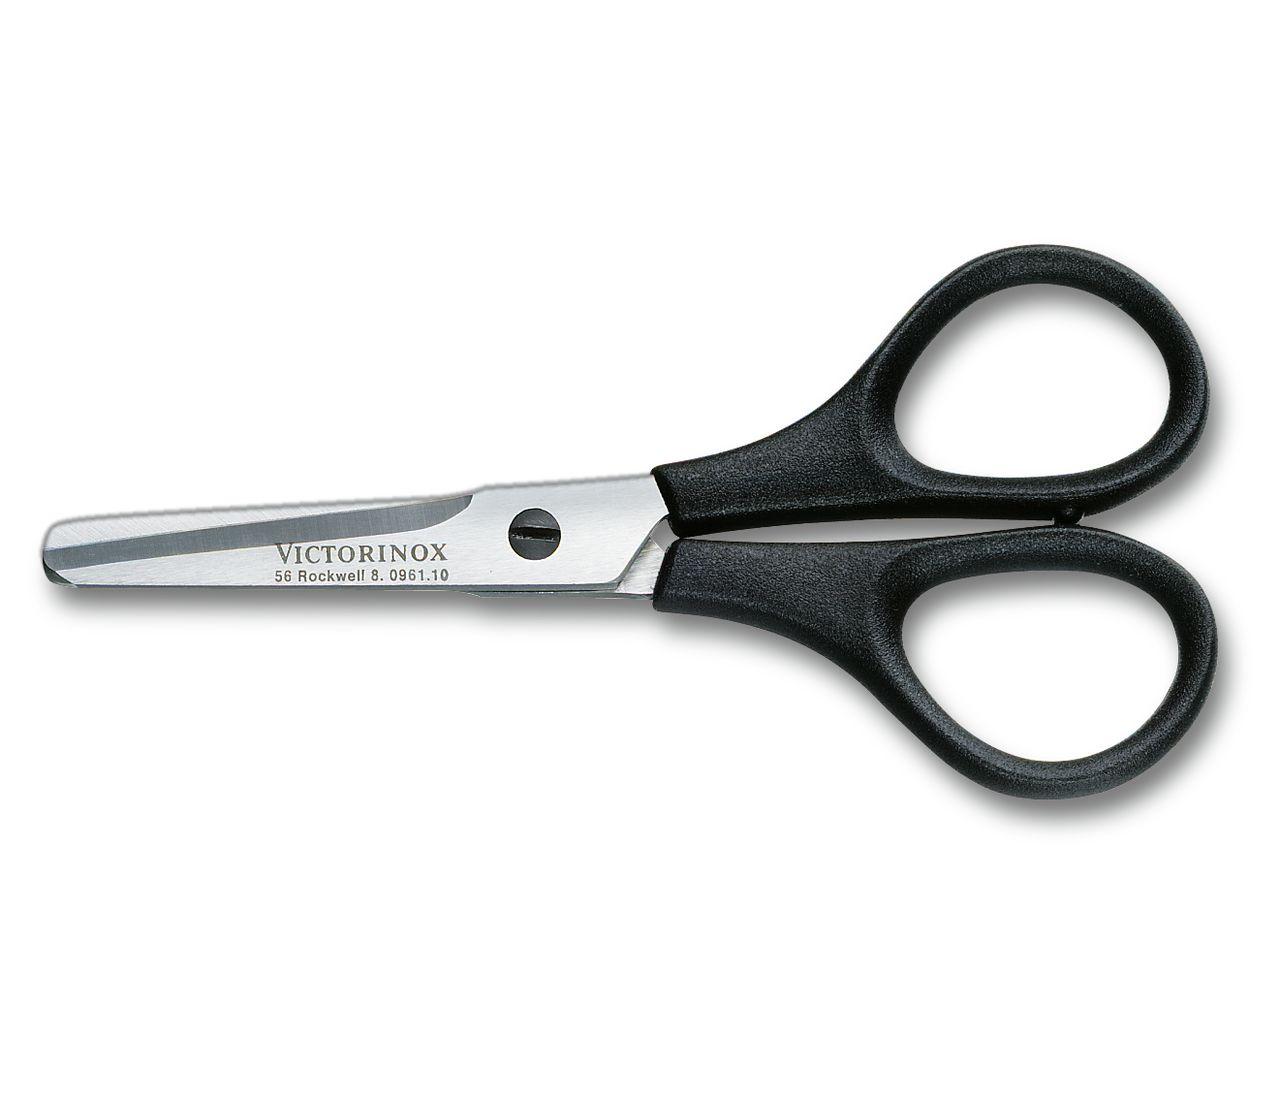 Pocket Scissors-8.0961.10